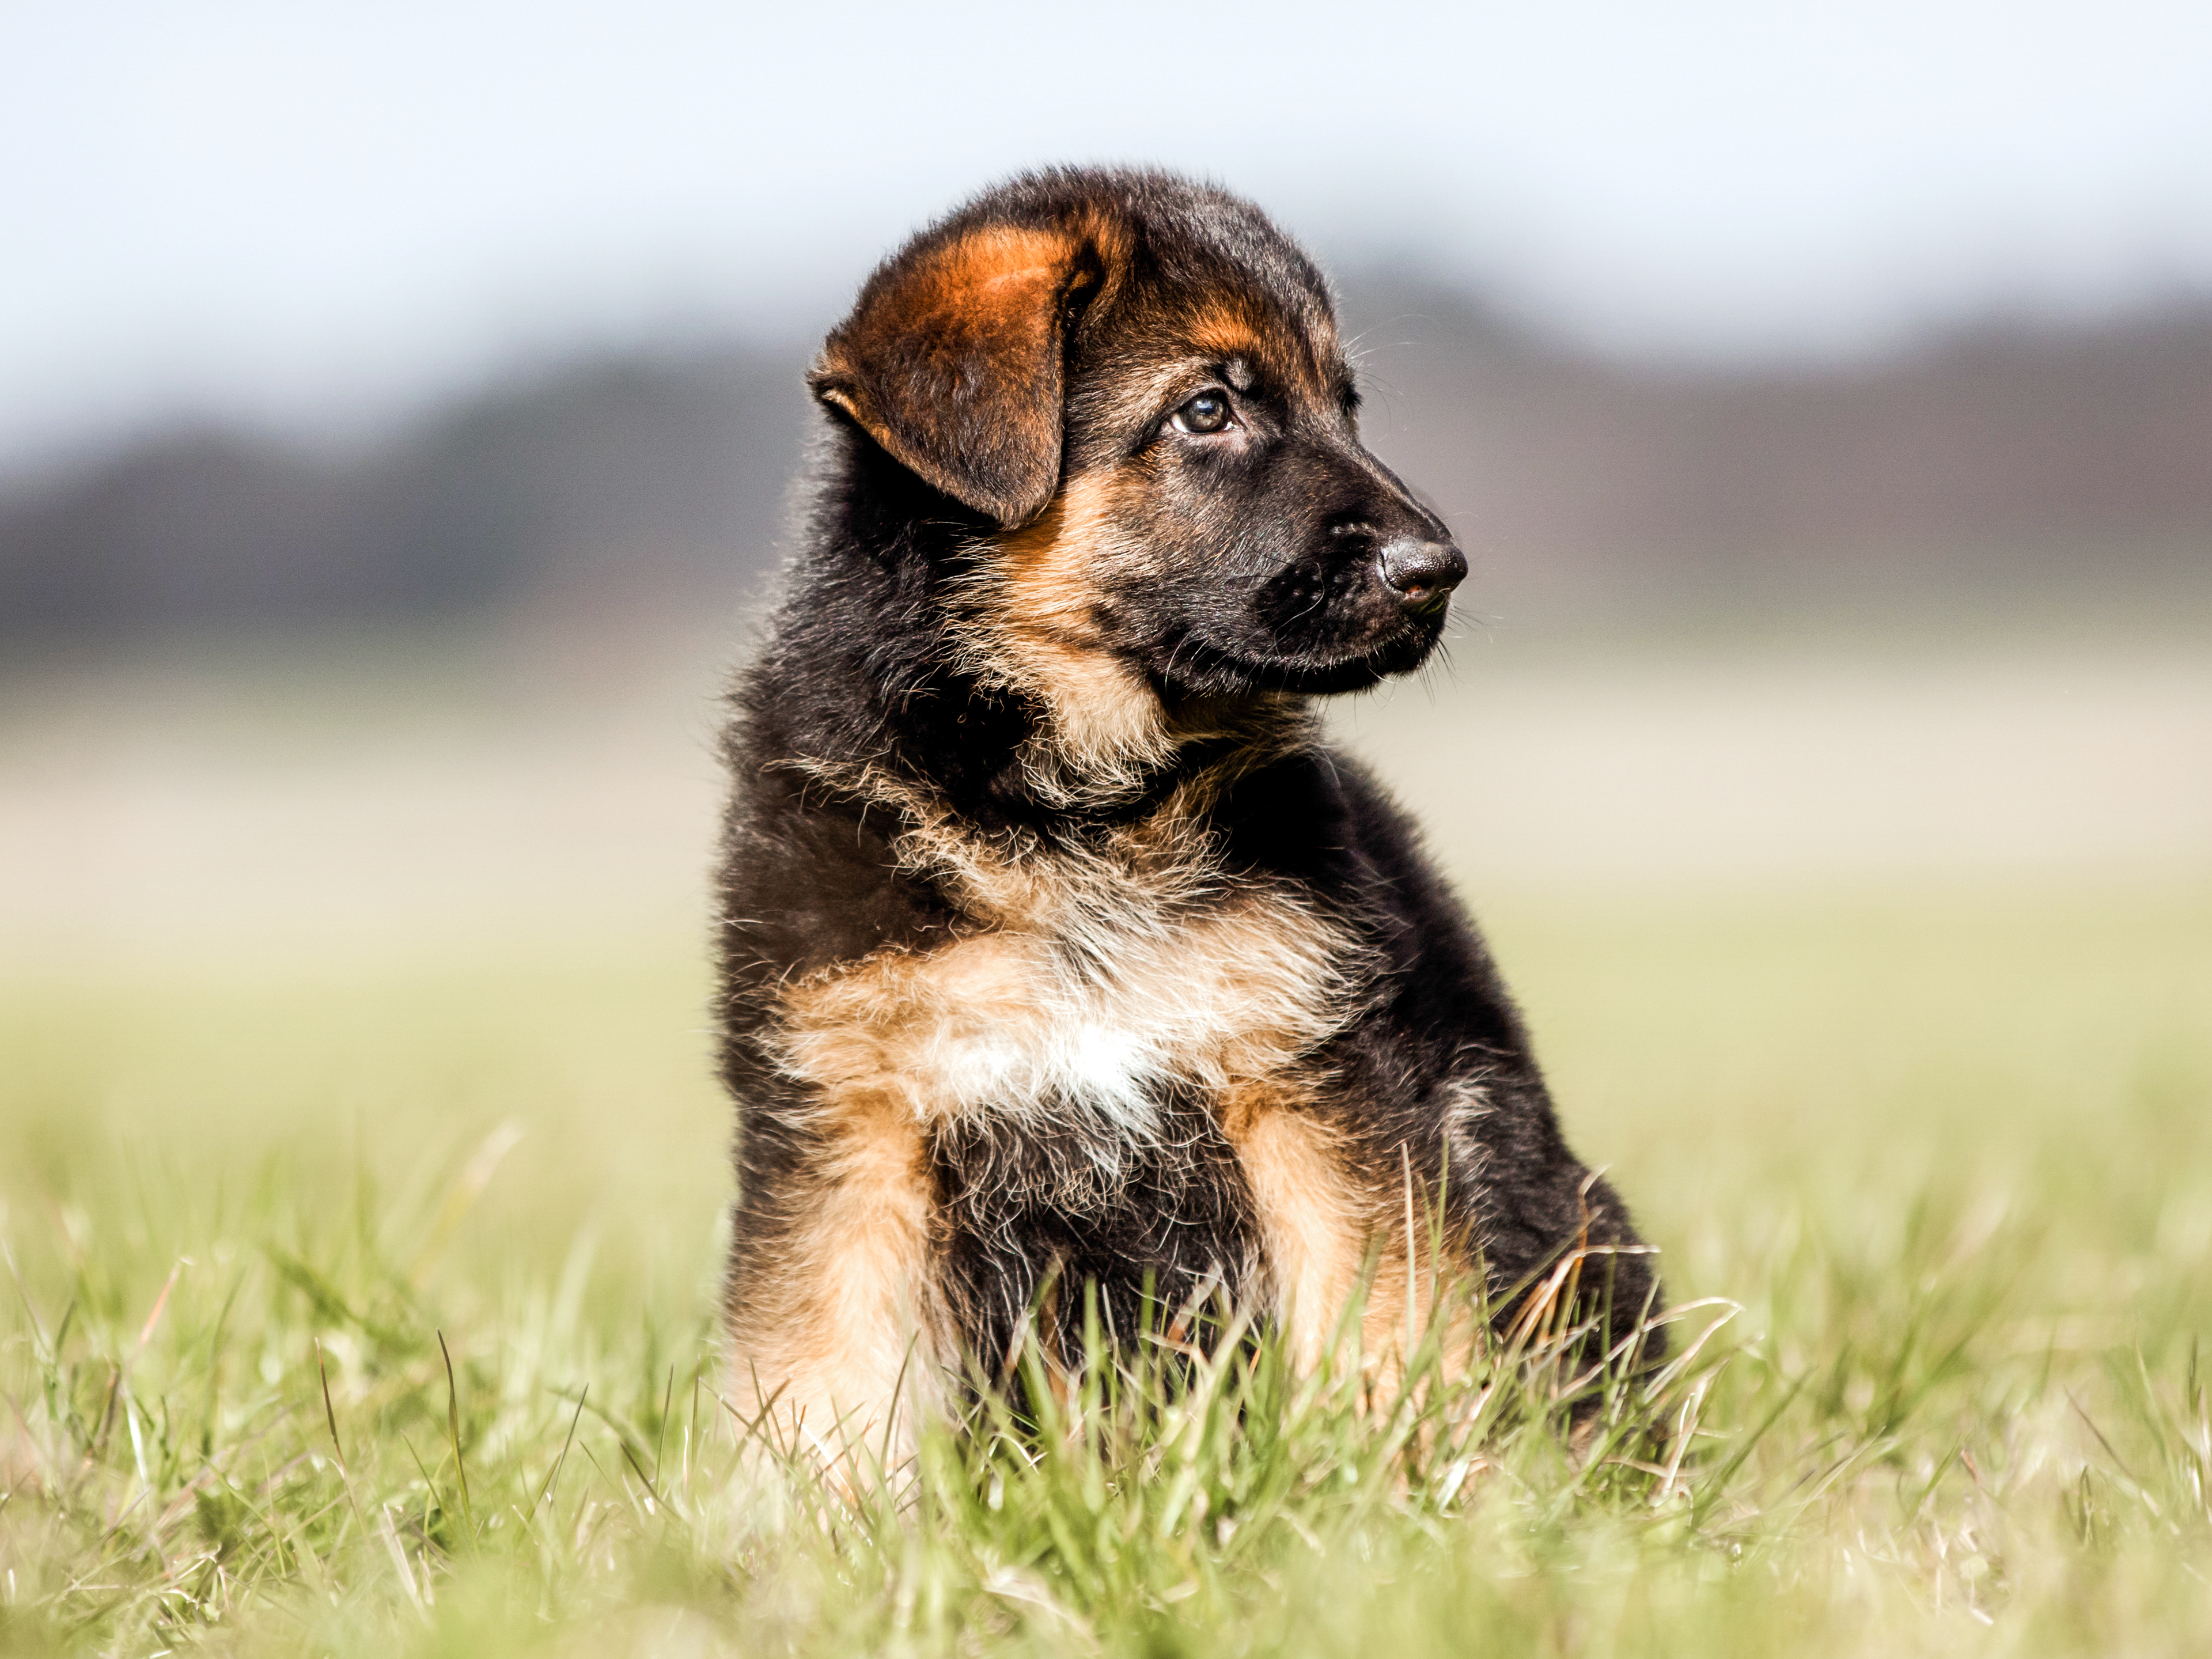 German Shepherd puppy sitting outdoors in grass